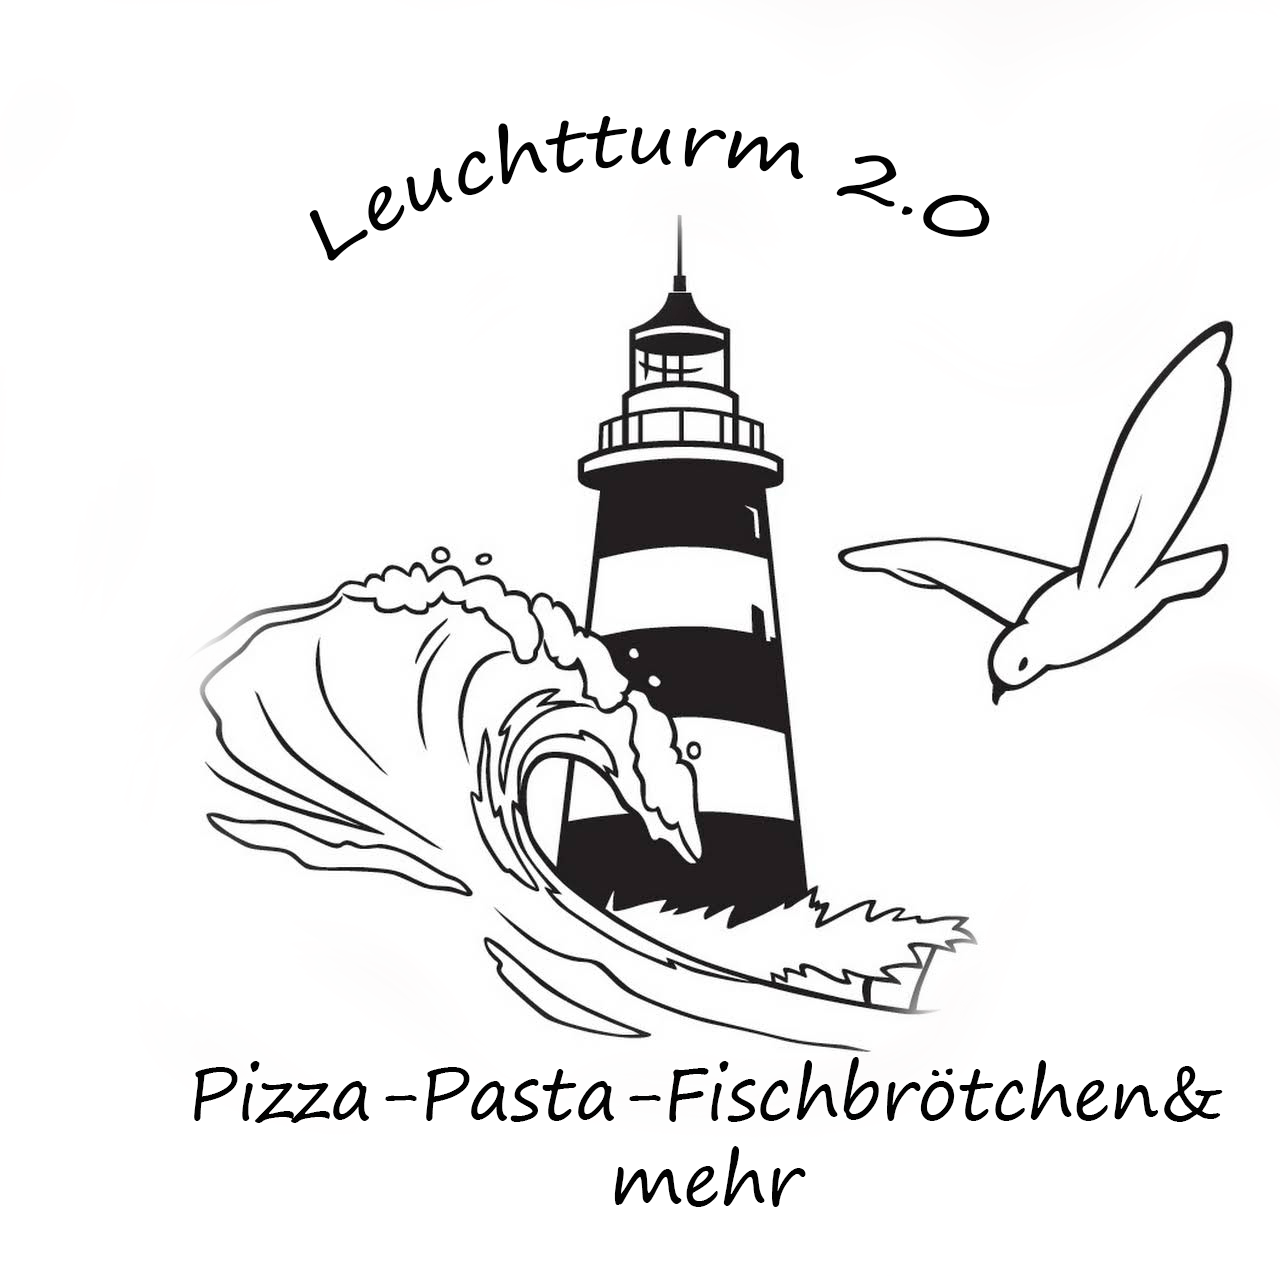 (c) Leuchtturm-rueckmarsdorf.de